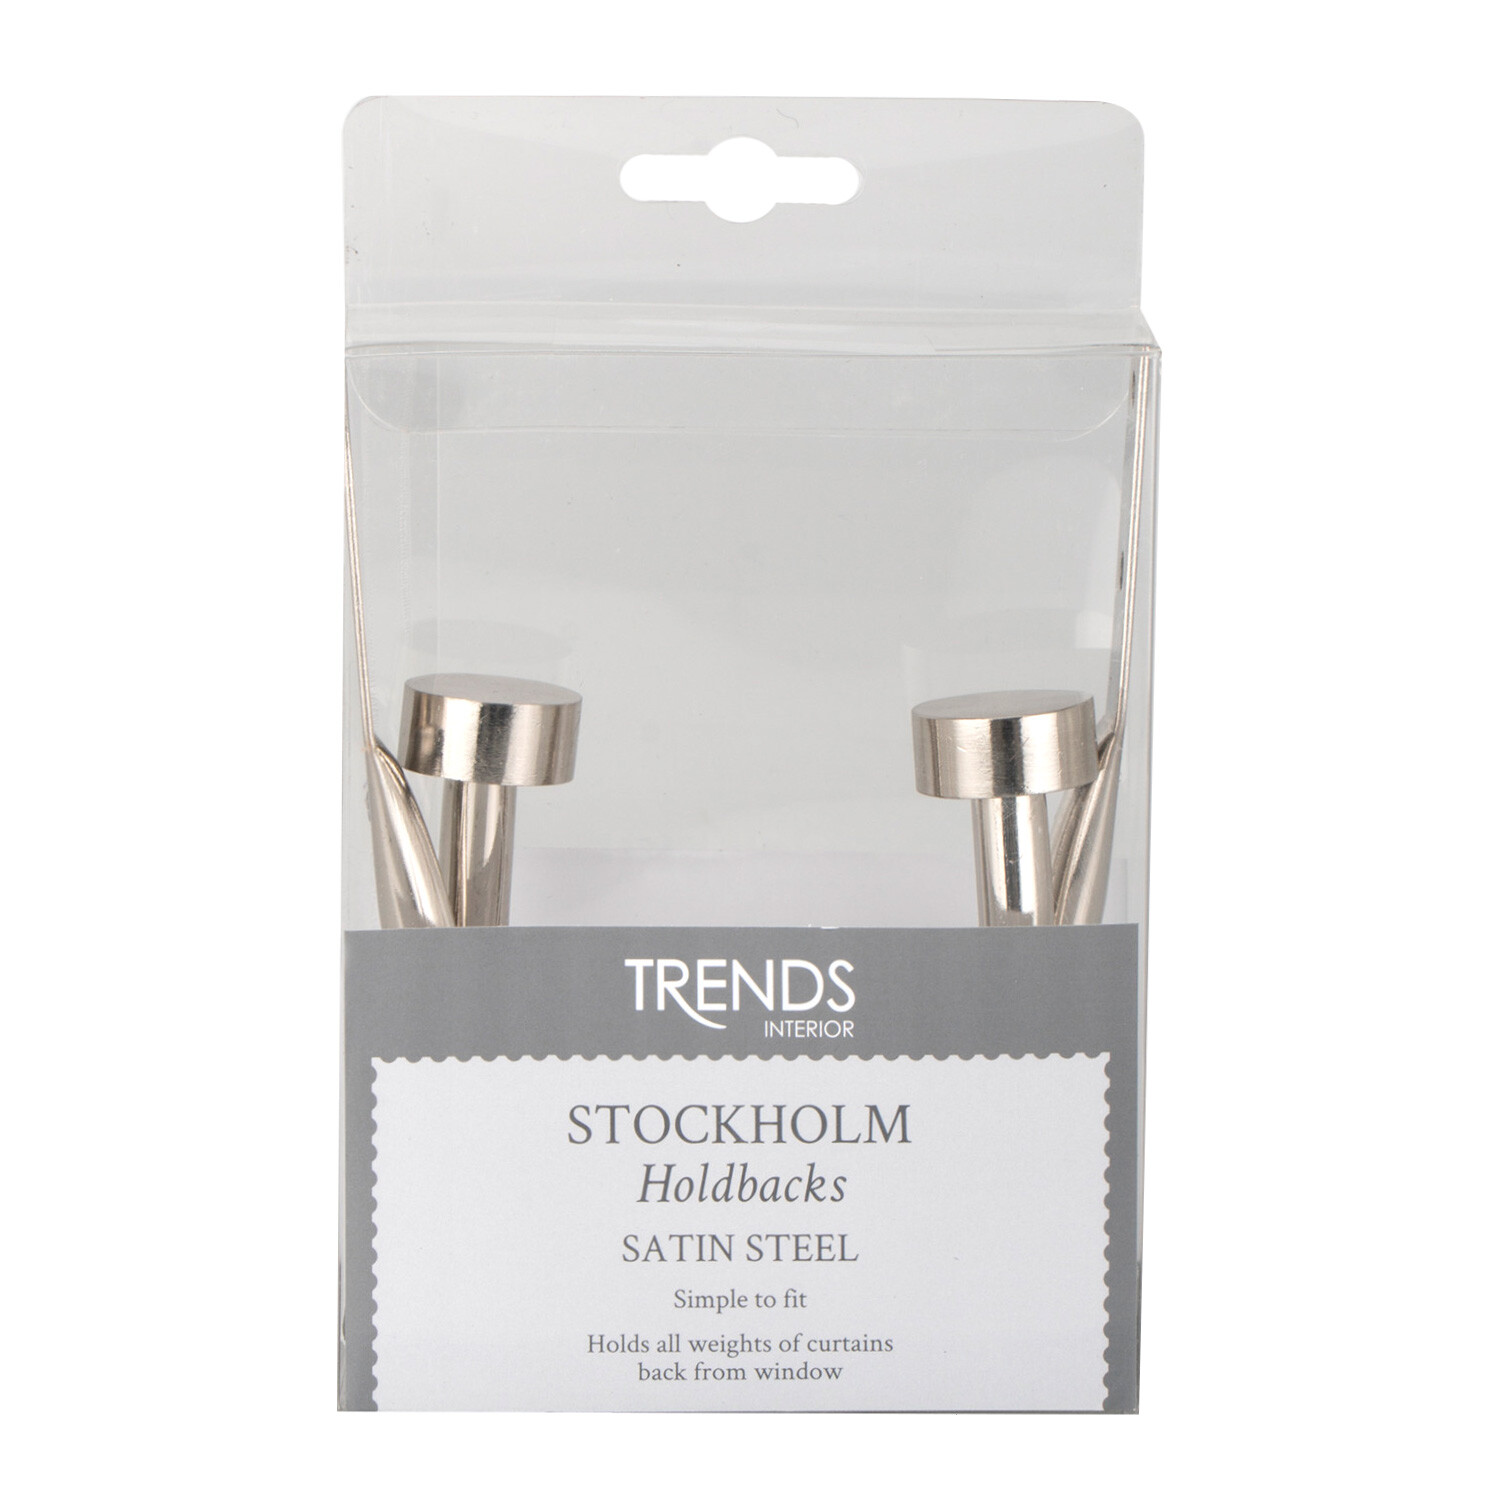 Trends Stockholm Satin Silver Curtain Holdbacks 2 Pack Image